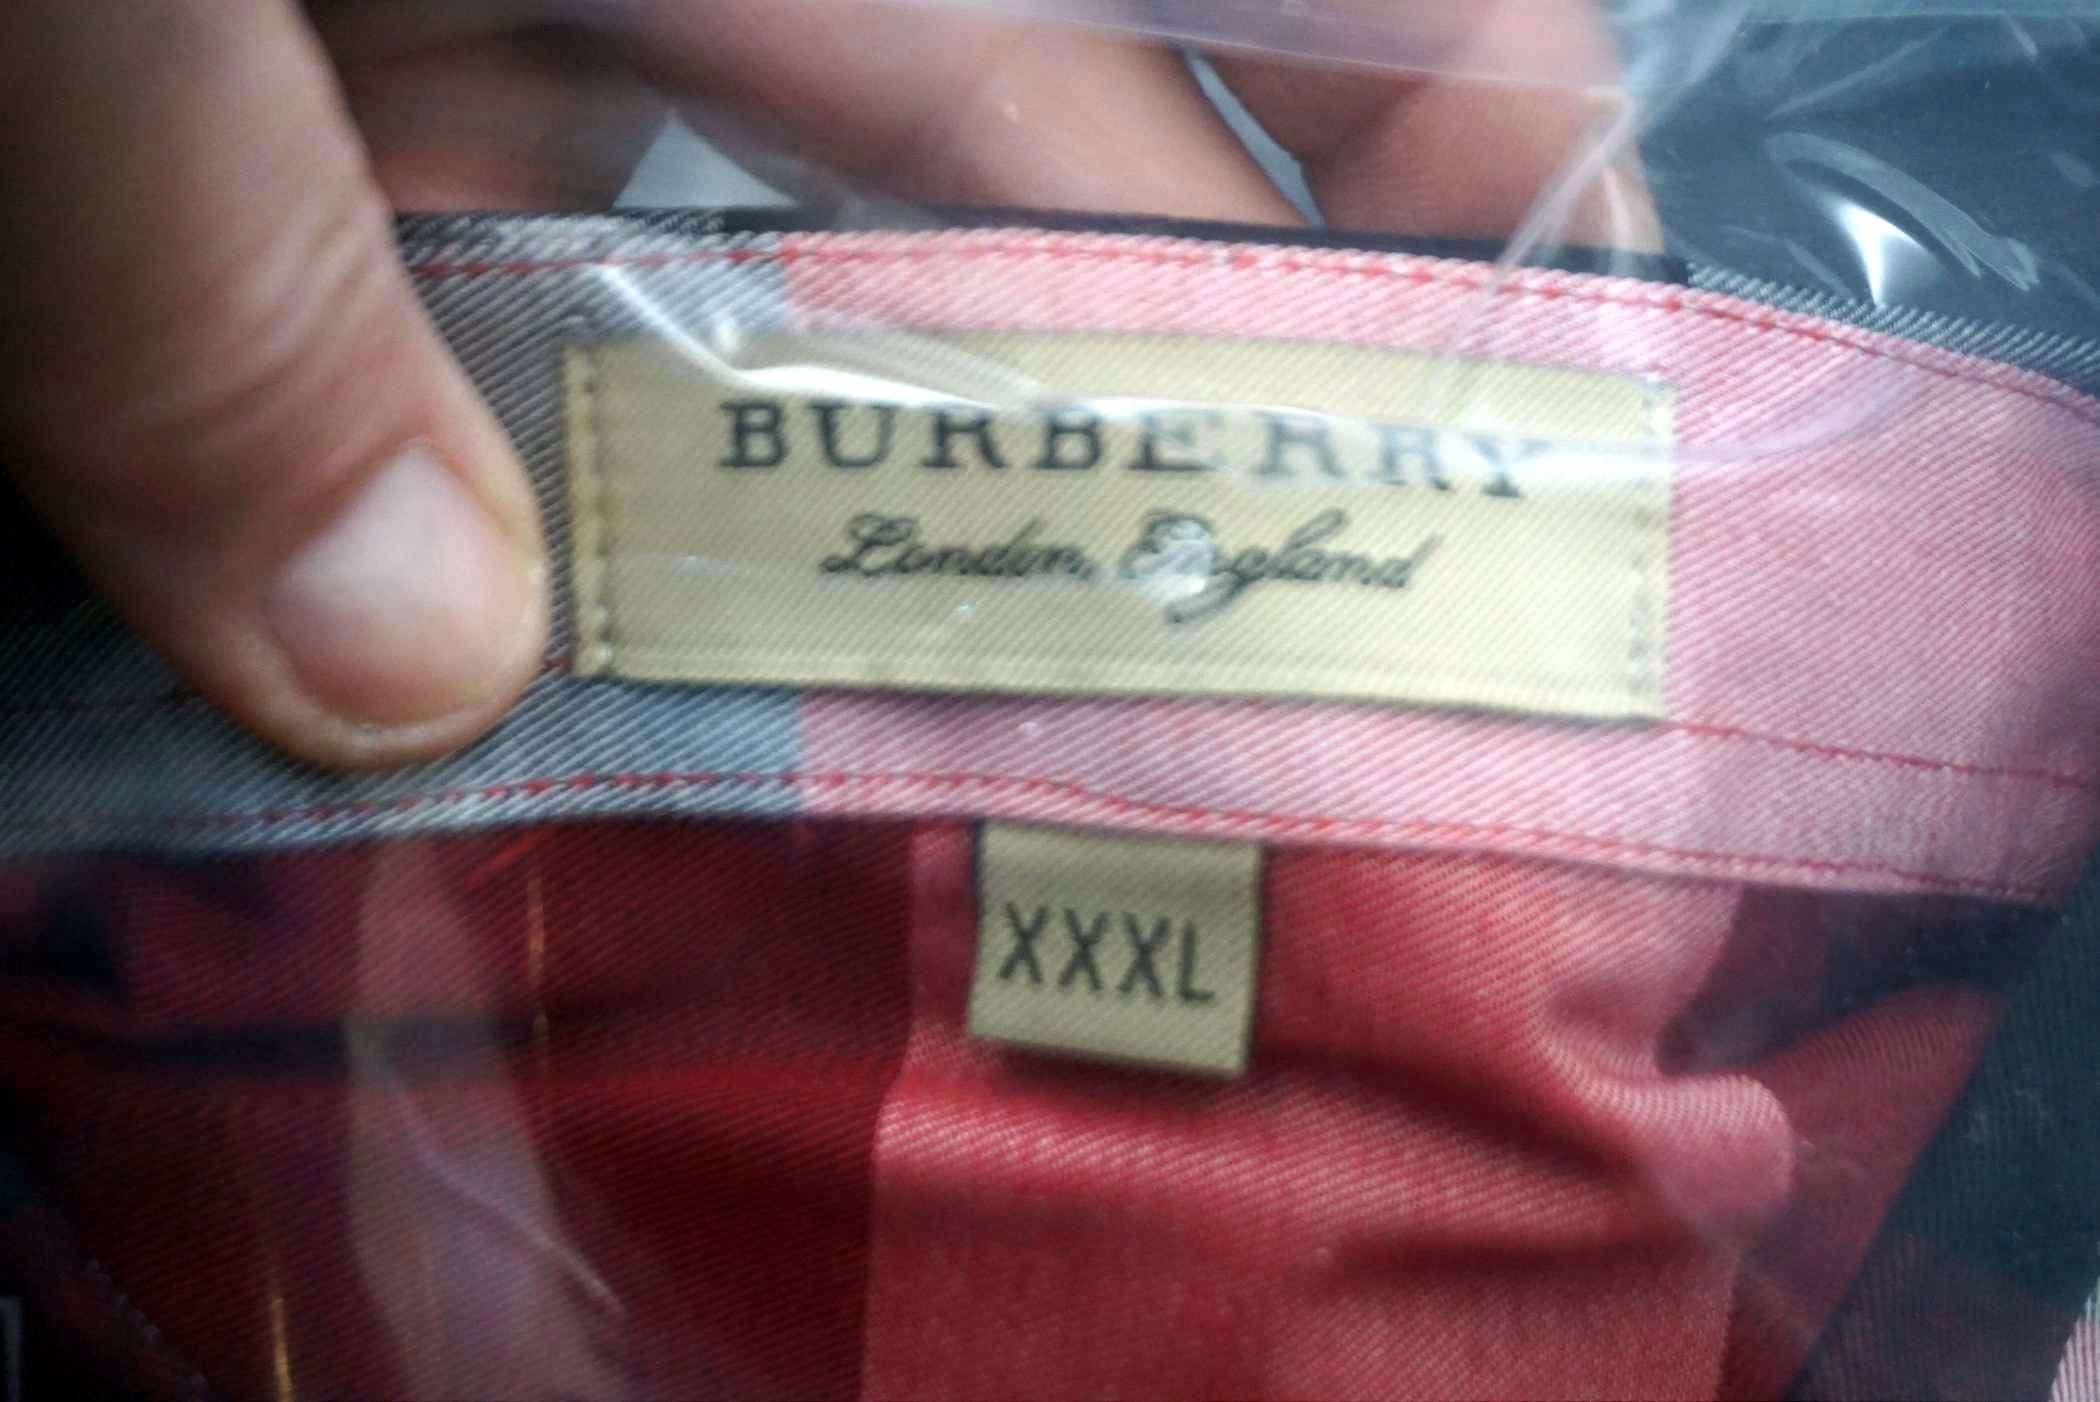 3 - Button Up Shirts (Burberry Xl, Burberry Xxl & Zilli Medium)